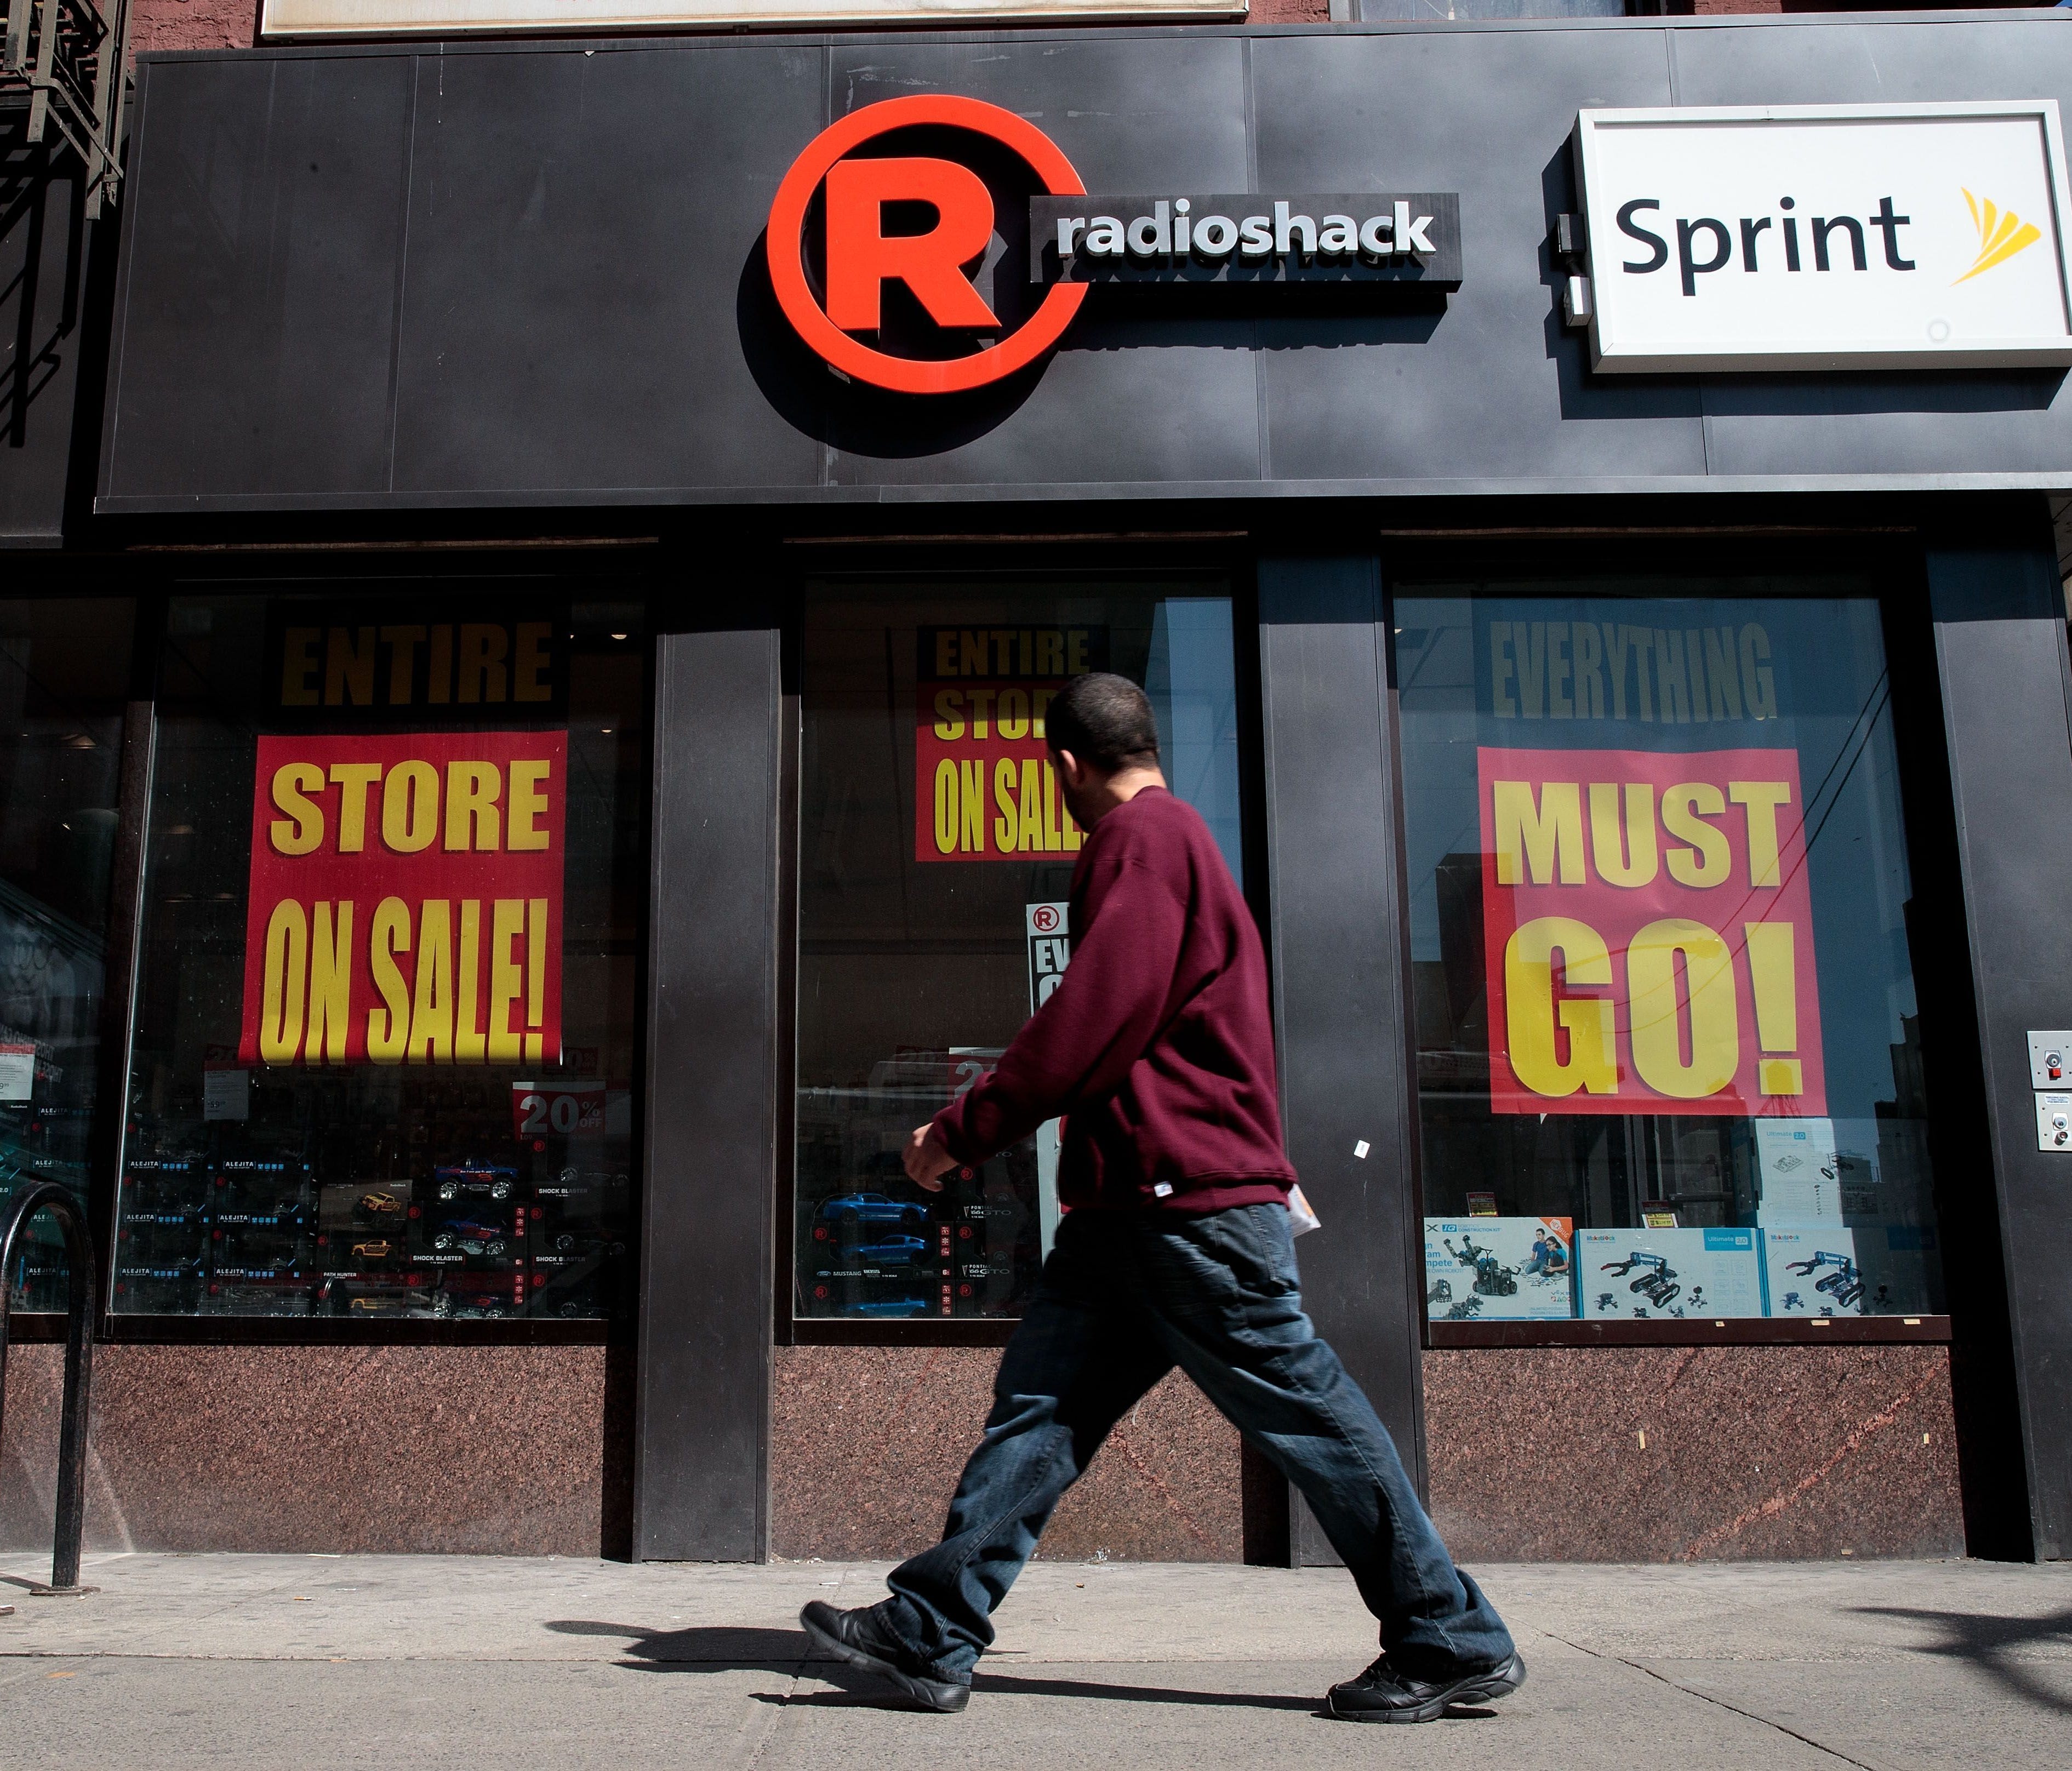 A man walks past a RadioShack storefront in the Chelsea neighborhood of New York